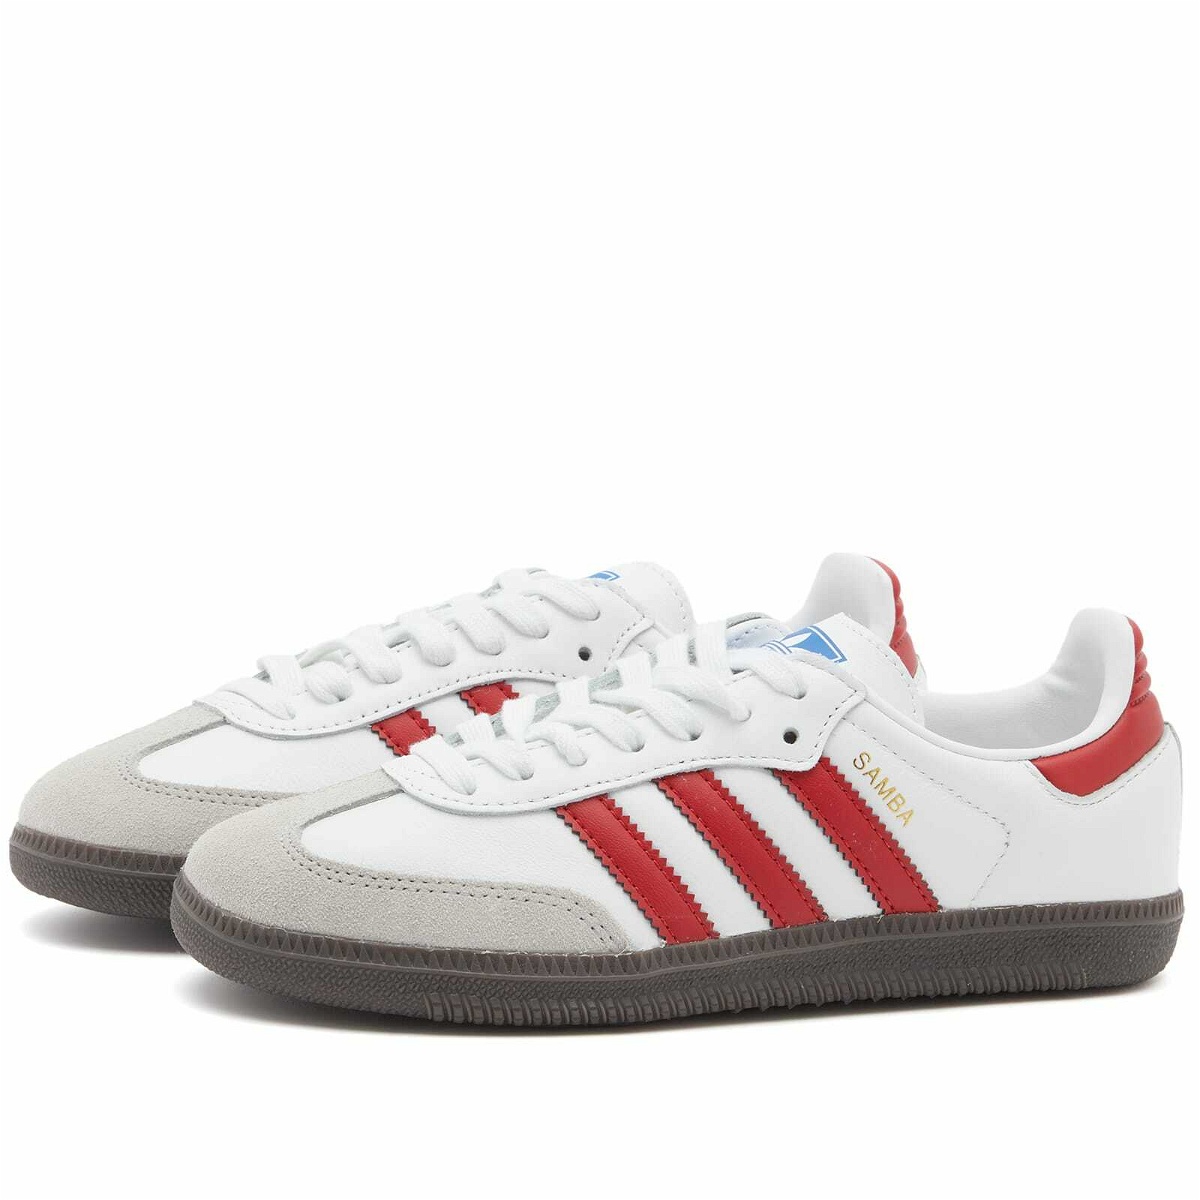 Adidas Samba OG Sneakers in White/Better Scarlet adidas